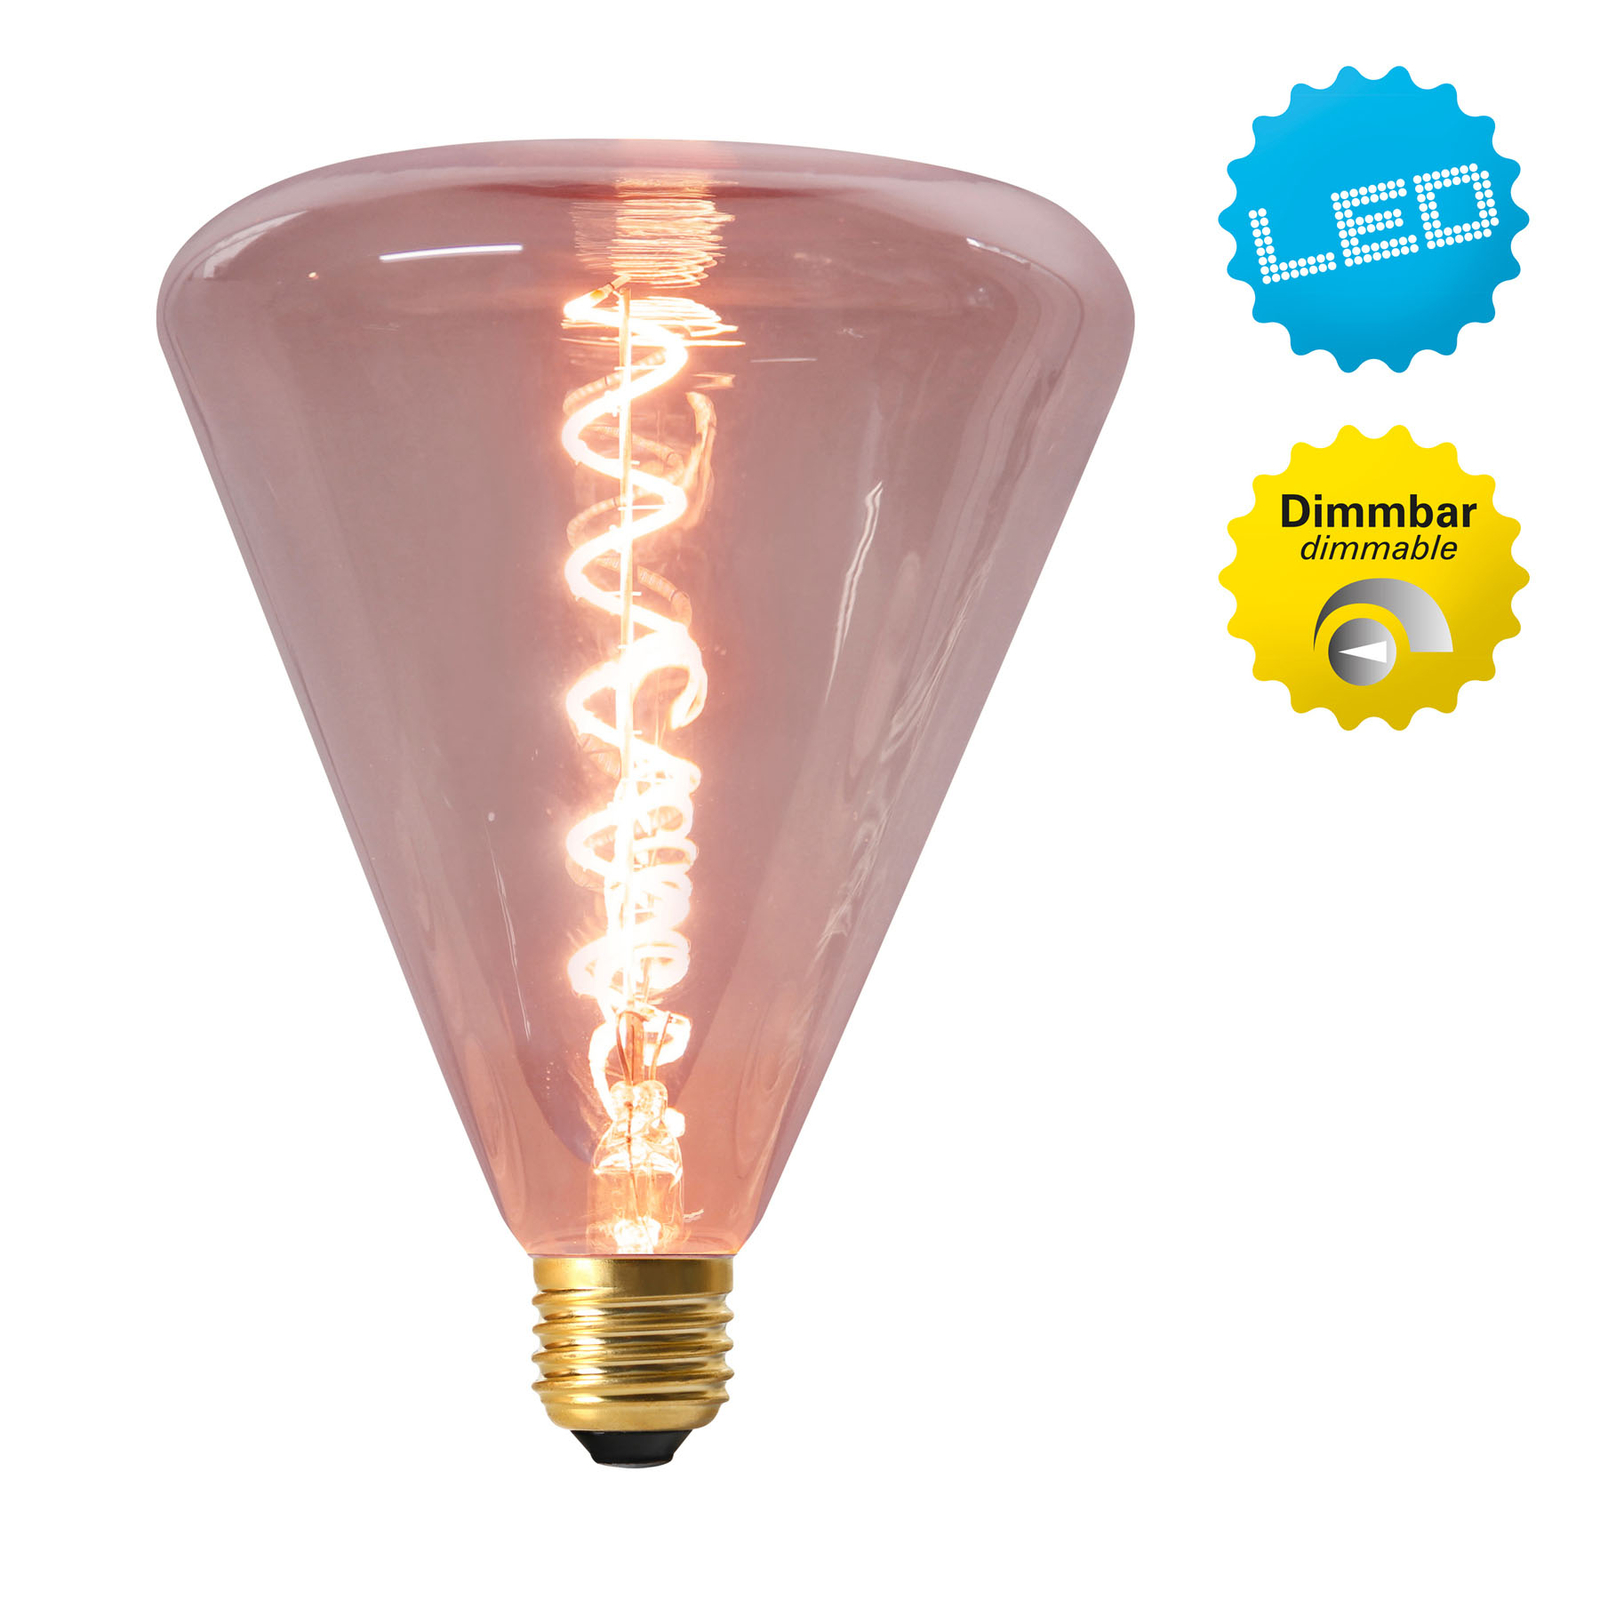 LED lamp Dilly E27 4W 2200K dimbaar, rood getint